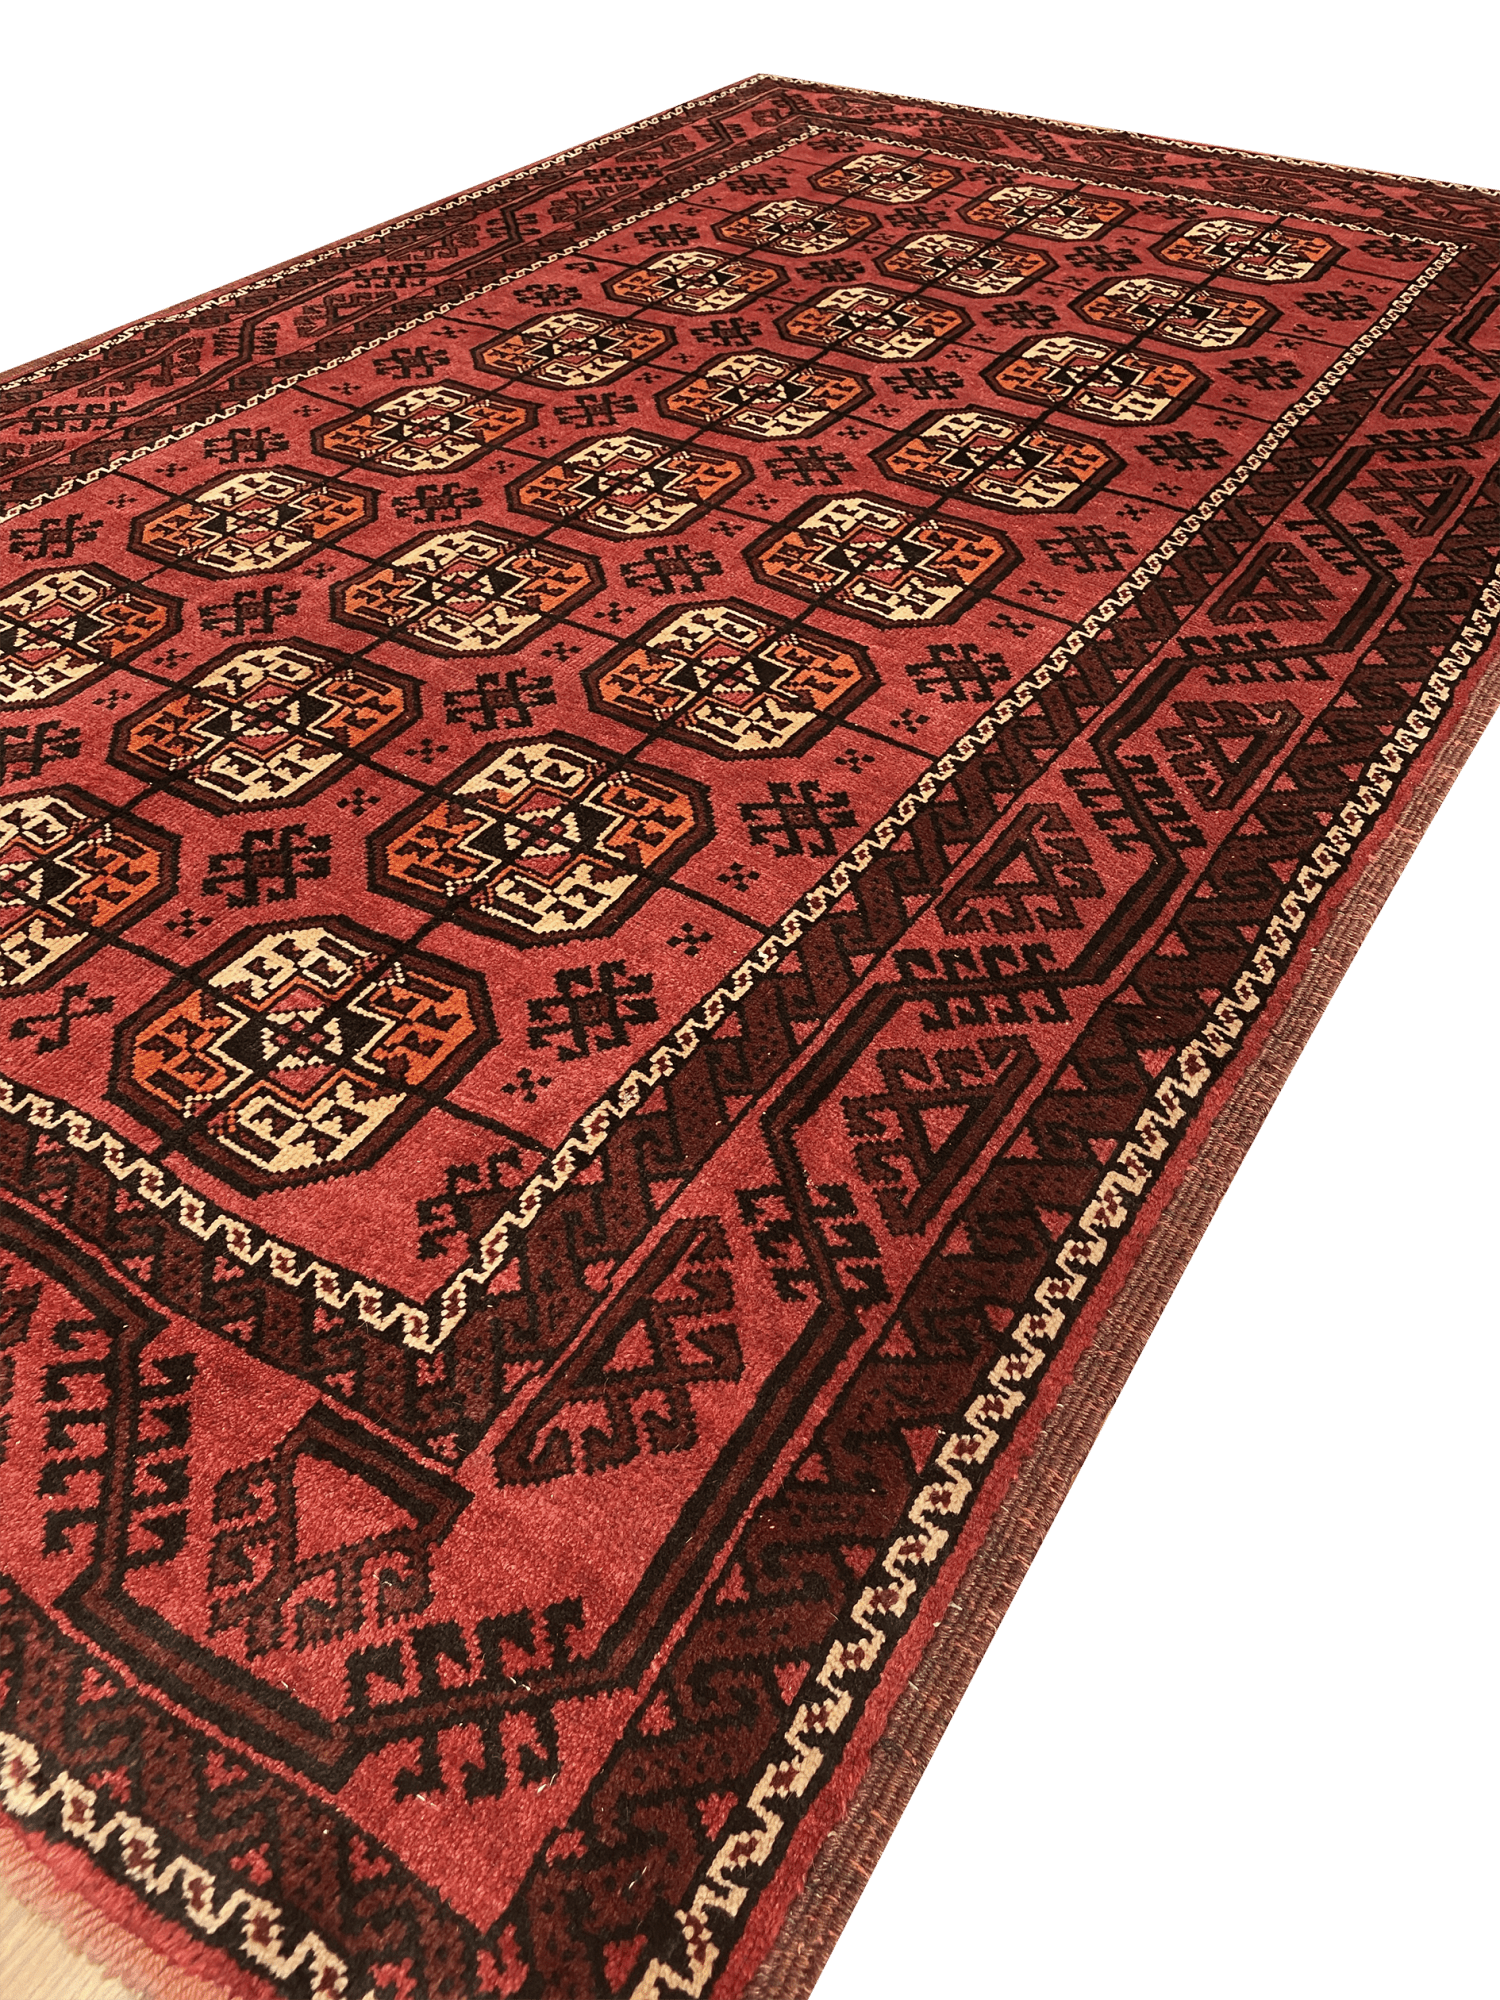 Antique Persian Balouchi 4' 10" x 7' 7" Handmade Wool Area Rug